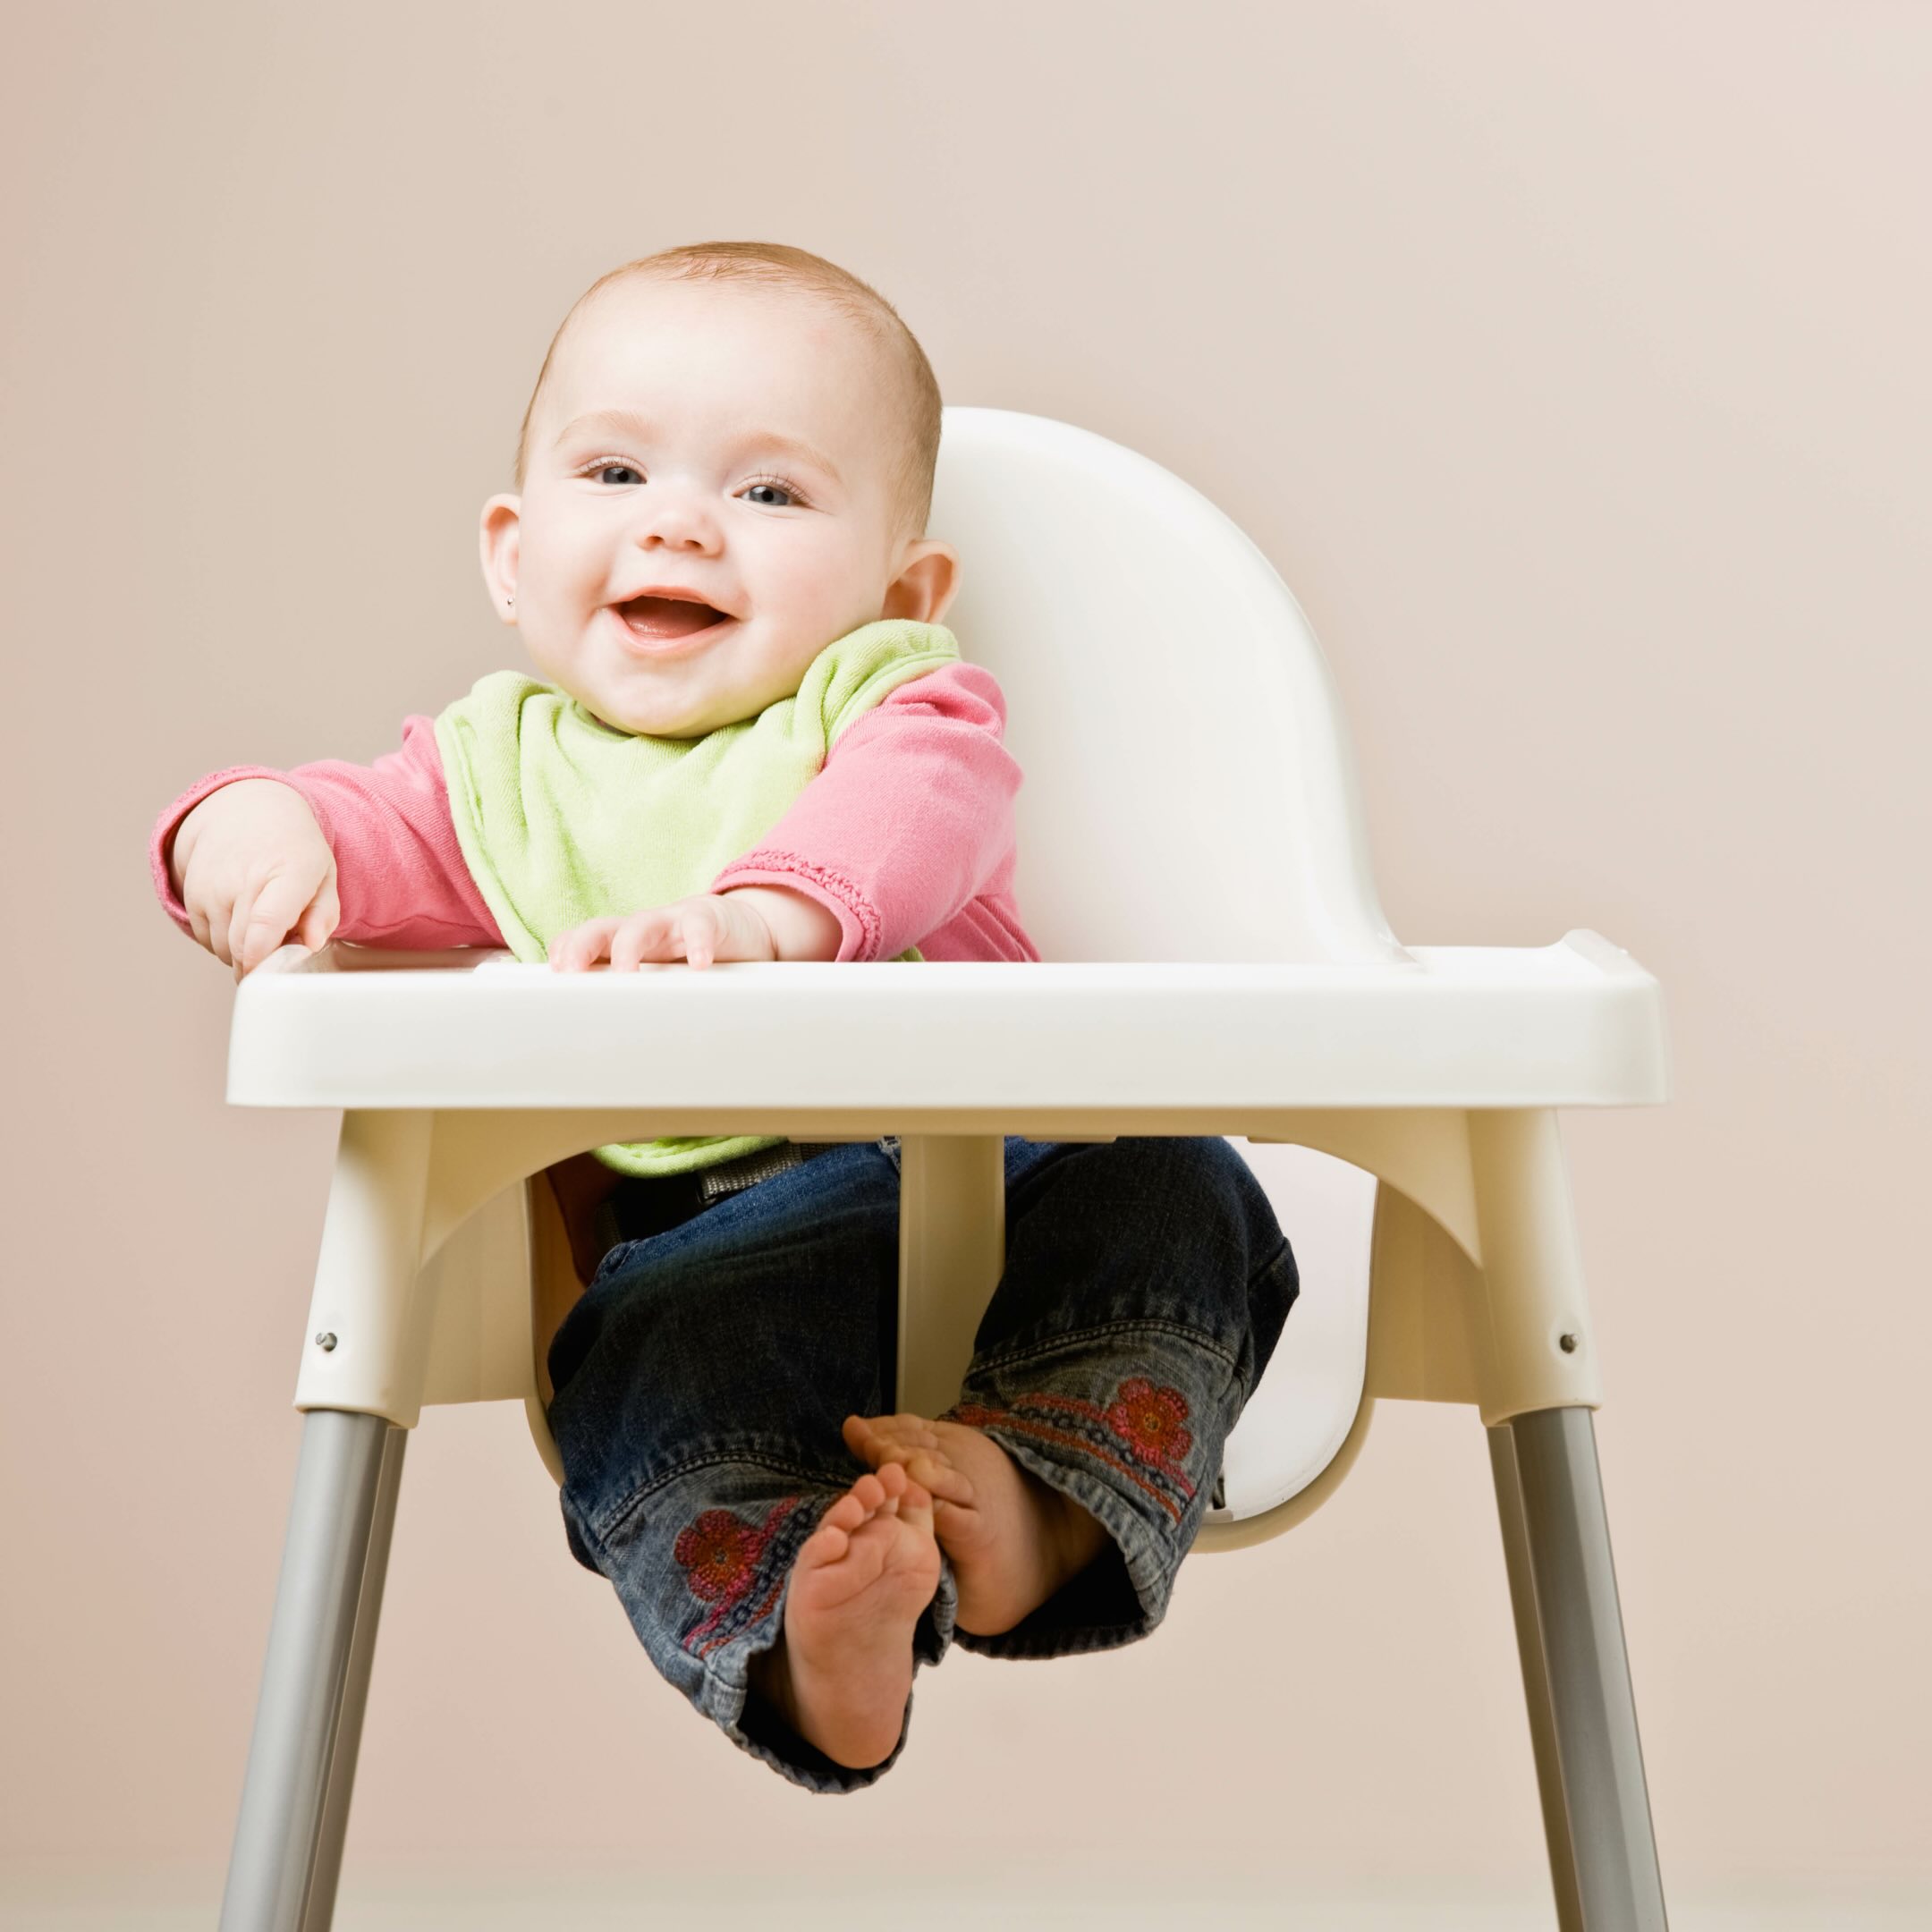 When Do Babies Need A High Chair